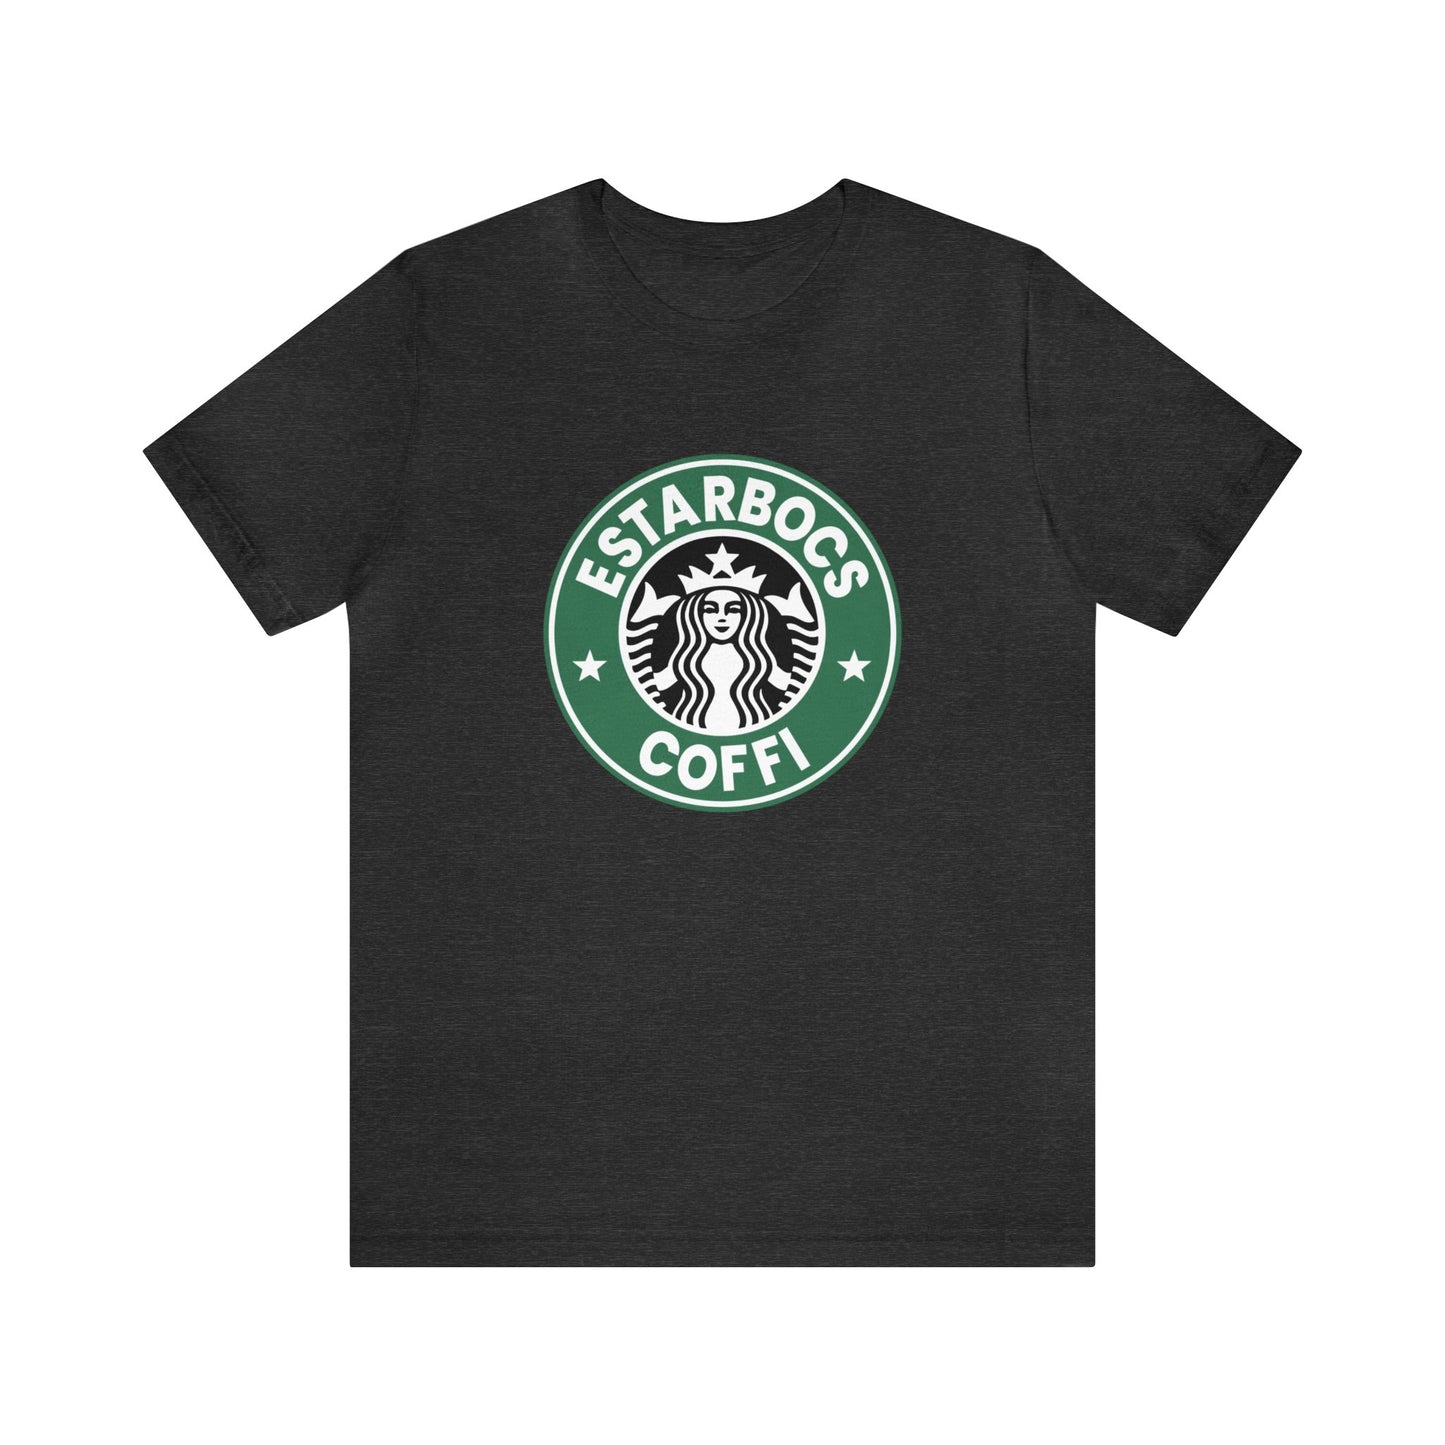 Estarbocs Coffi T-Shirt - Funny Parody Starbucks Coffee T-Shirt